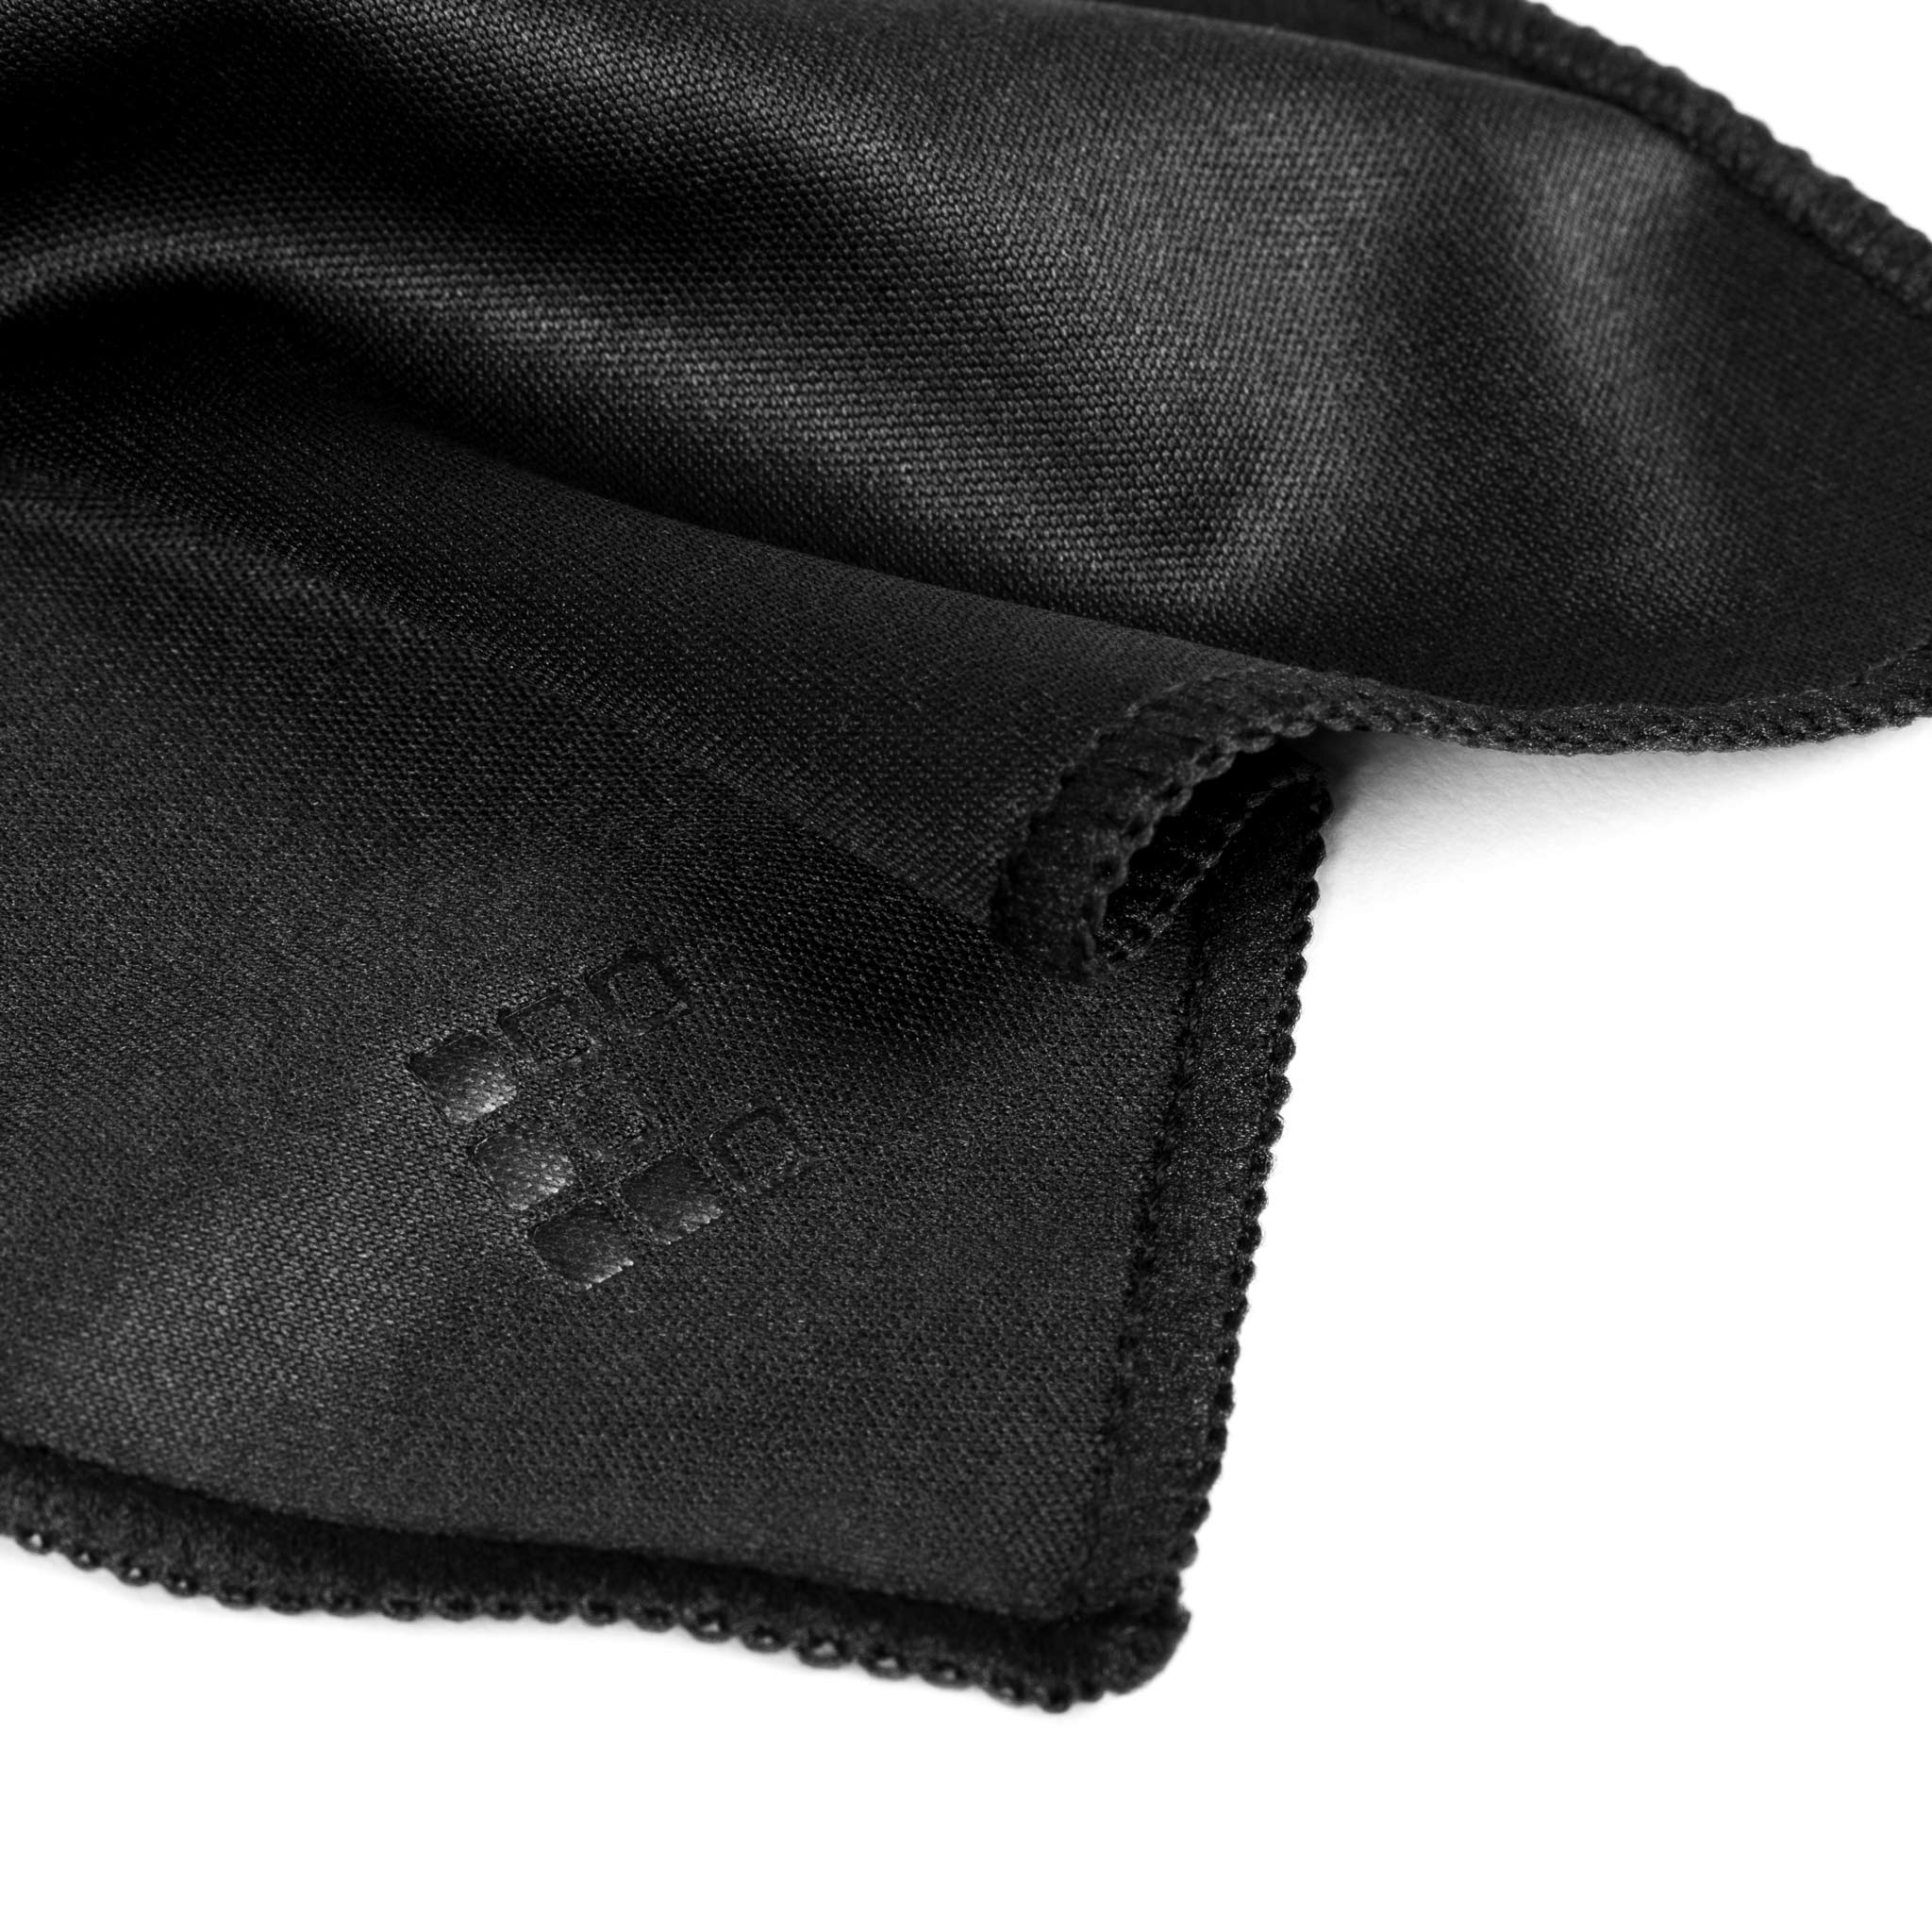 Latercase Black Microfiber Cloth - Close-up